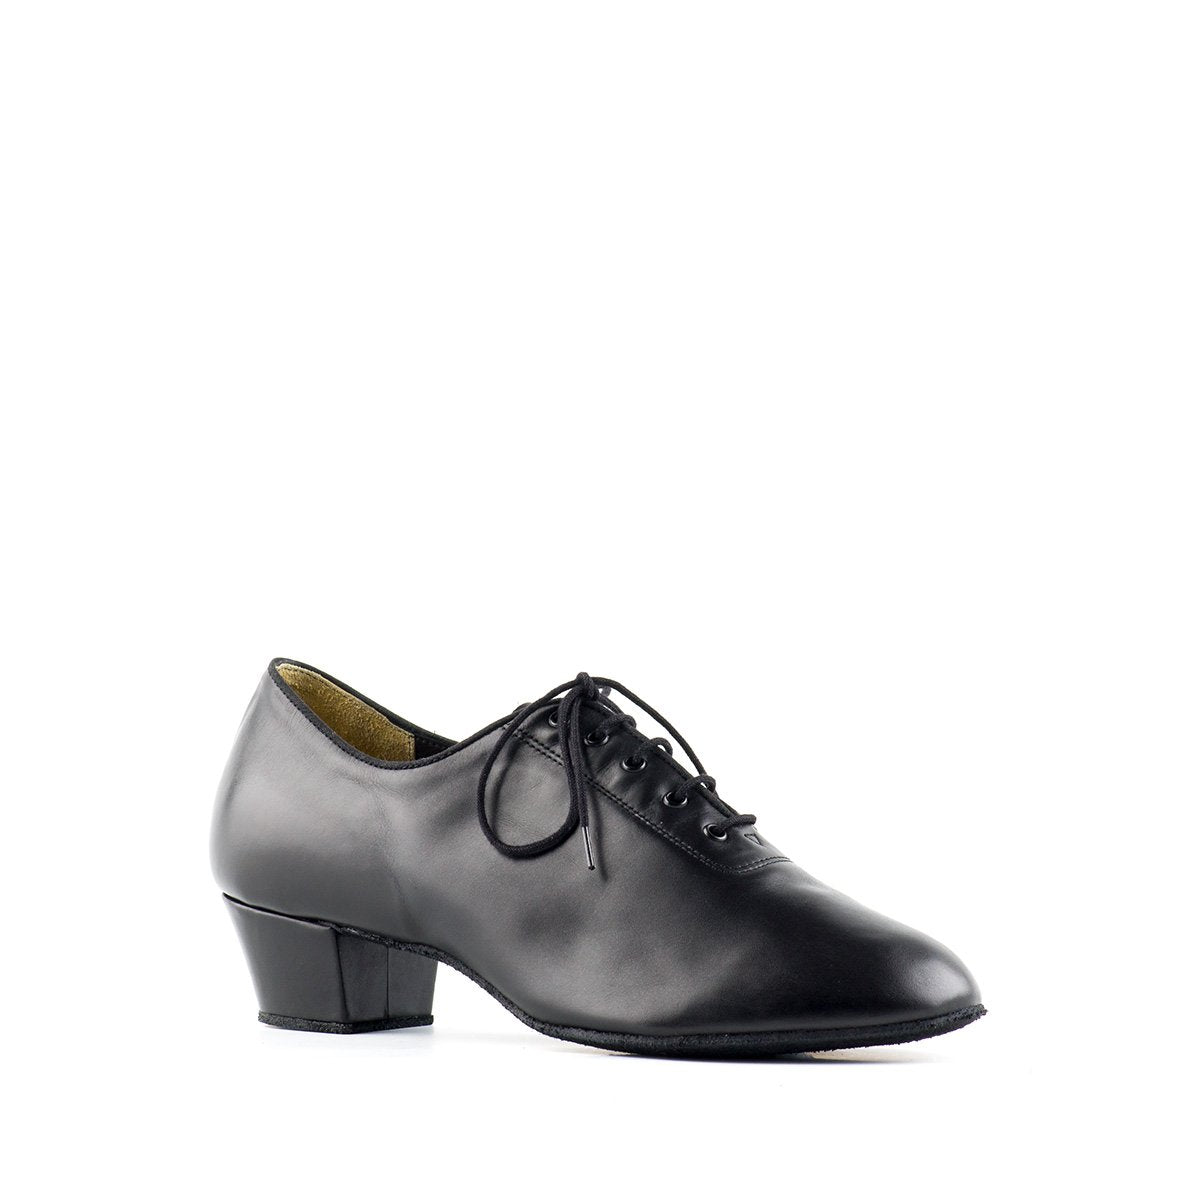 black leather Latin shoe for men